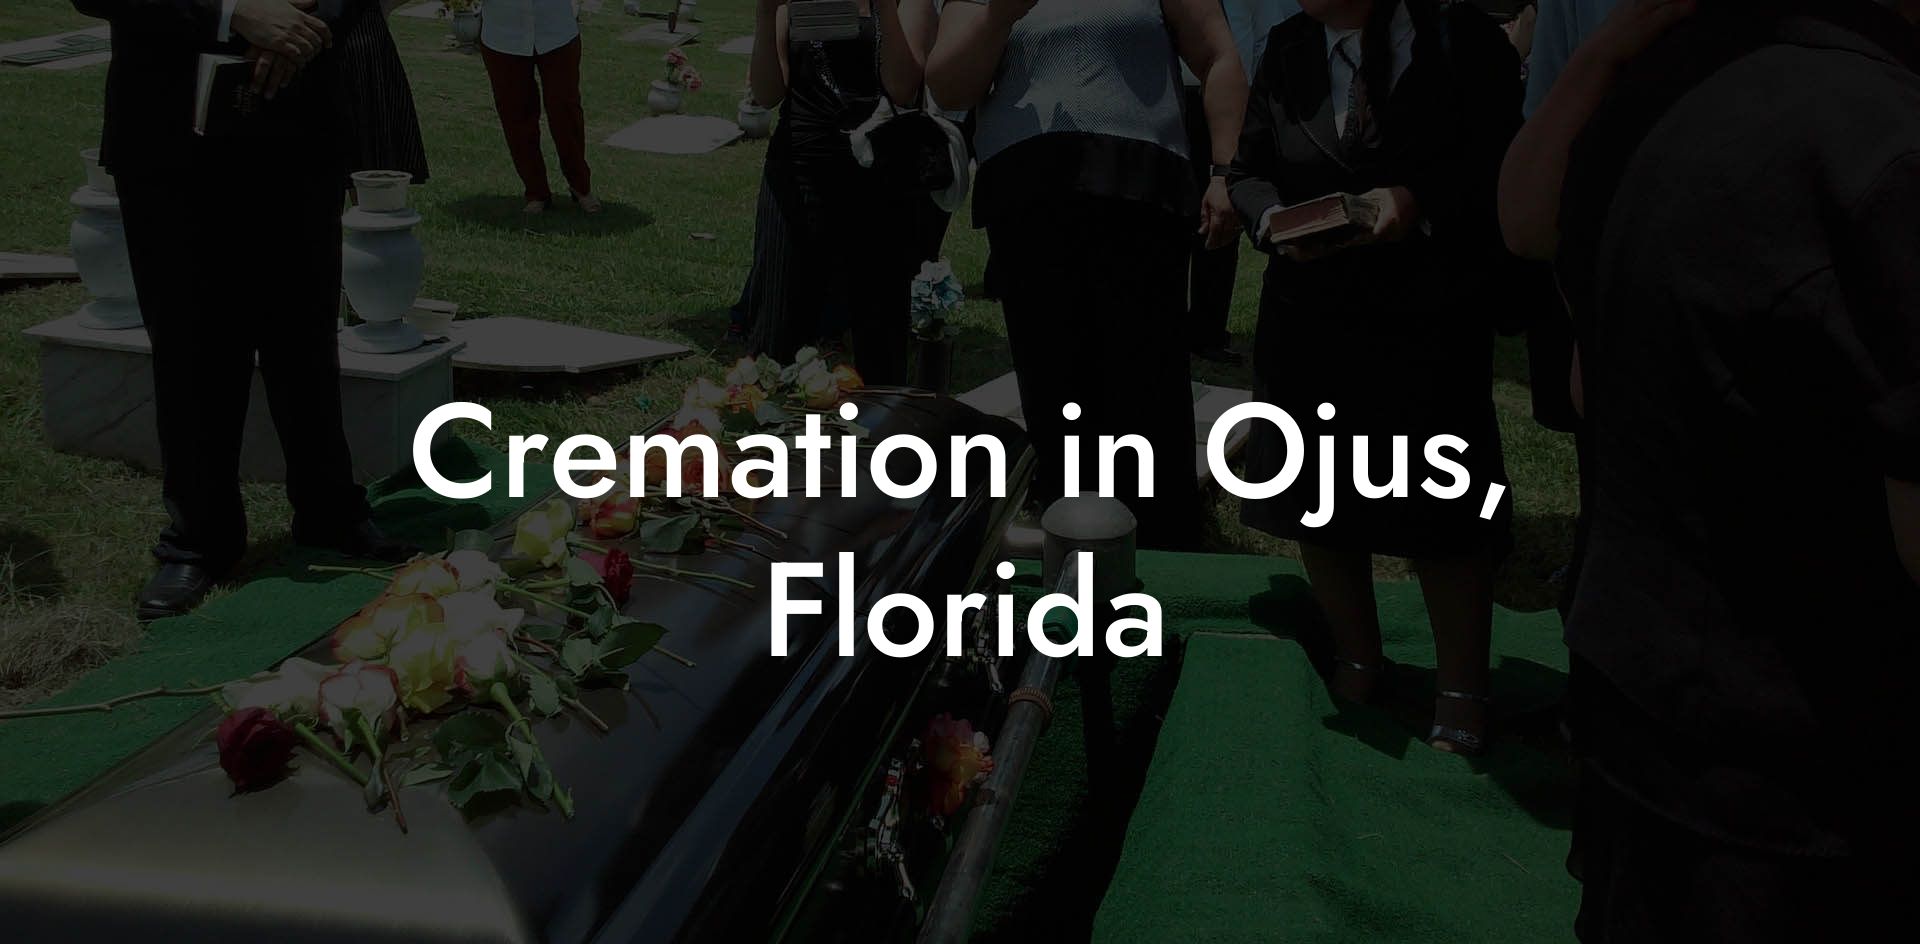 Cremation in Ojus, Florida